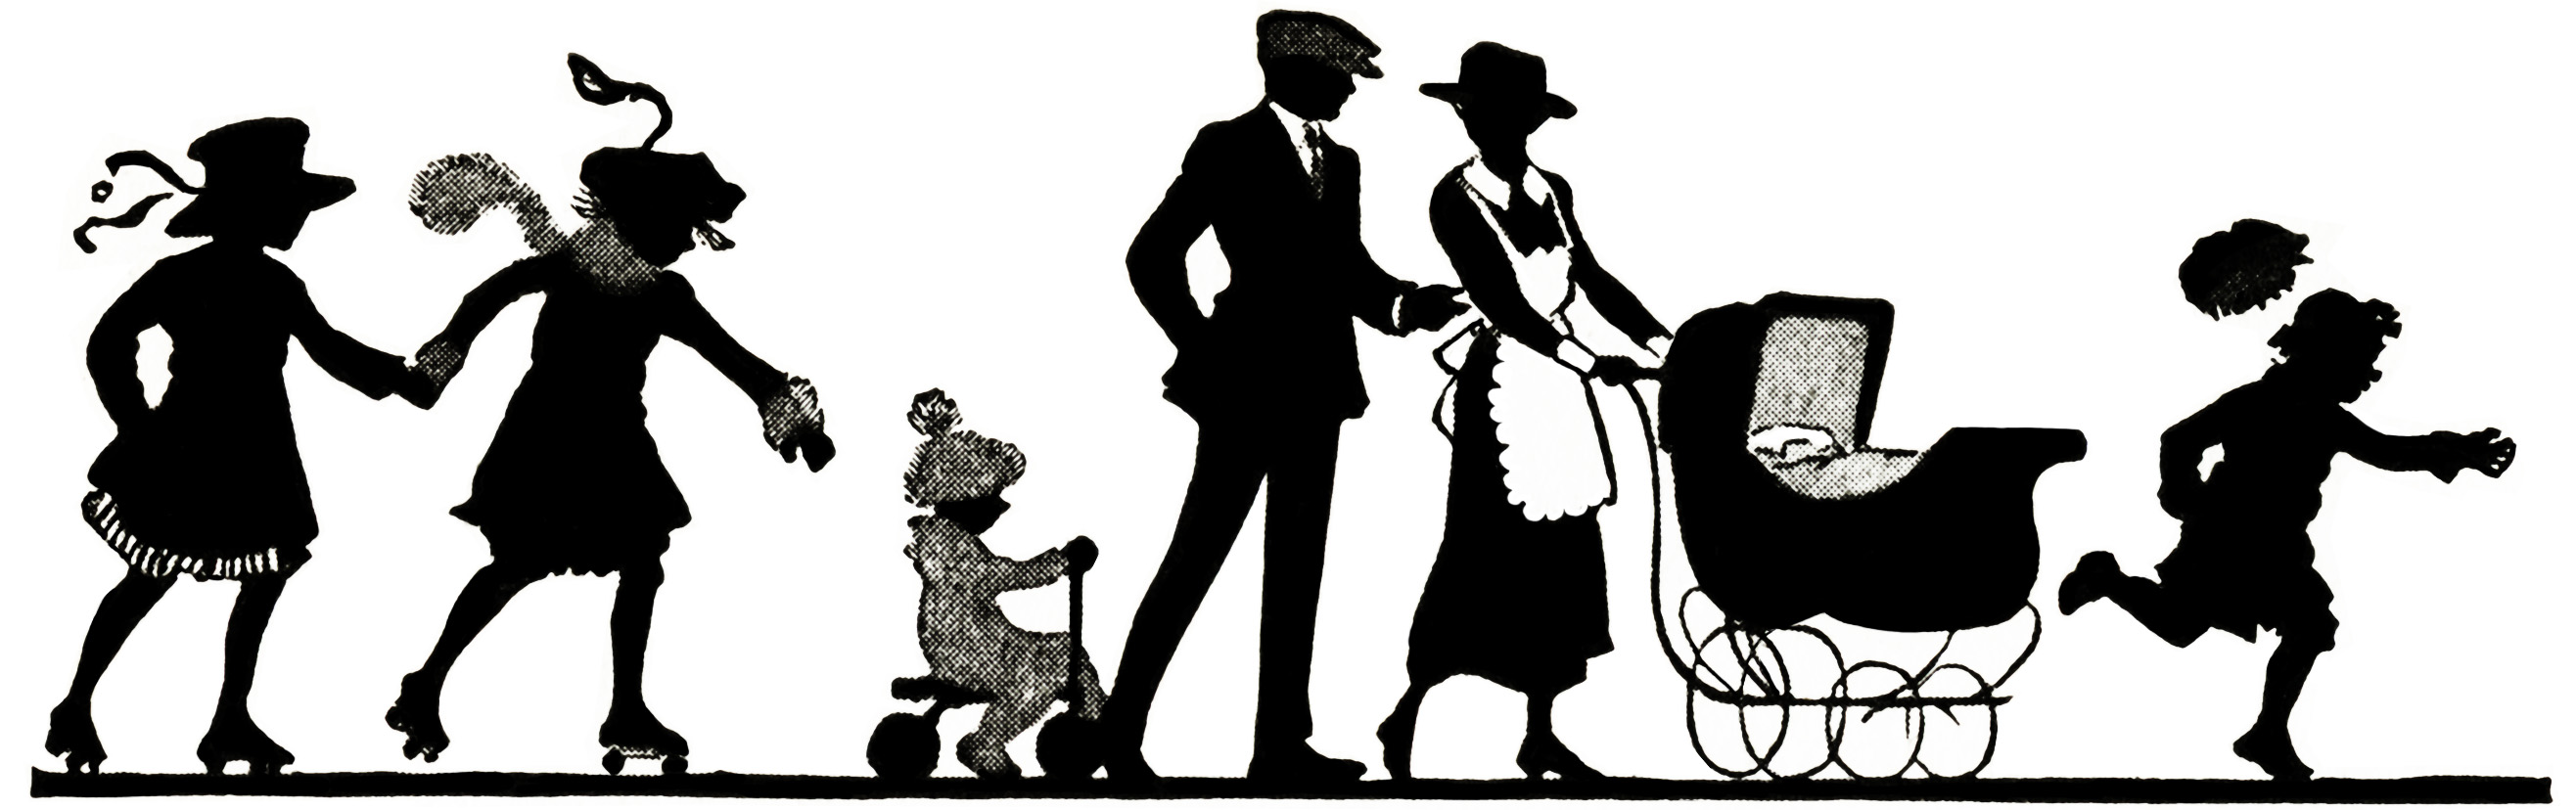 clip art silhouette family - photo #32